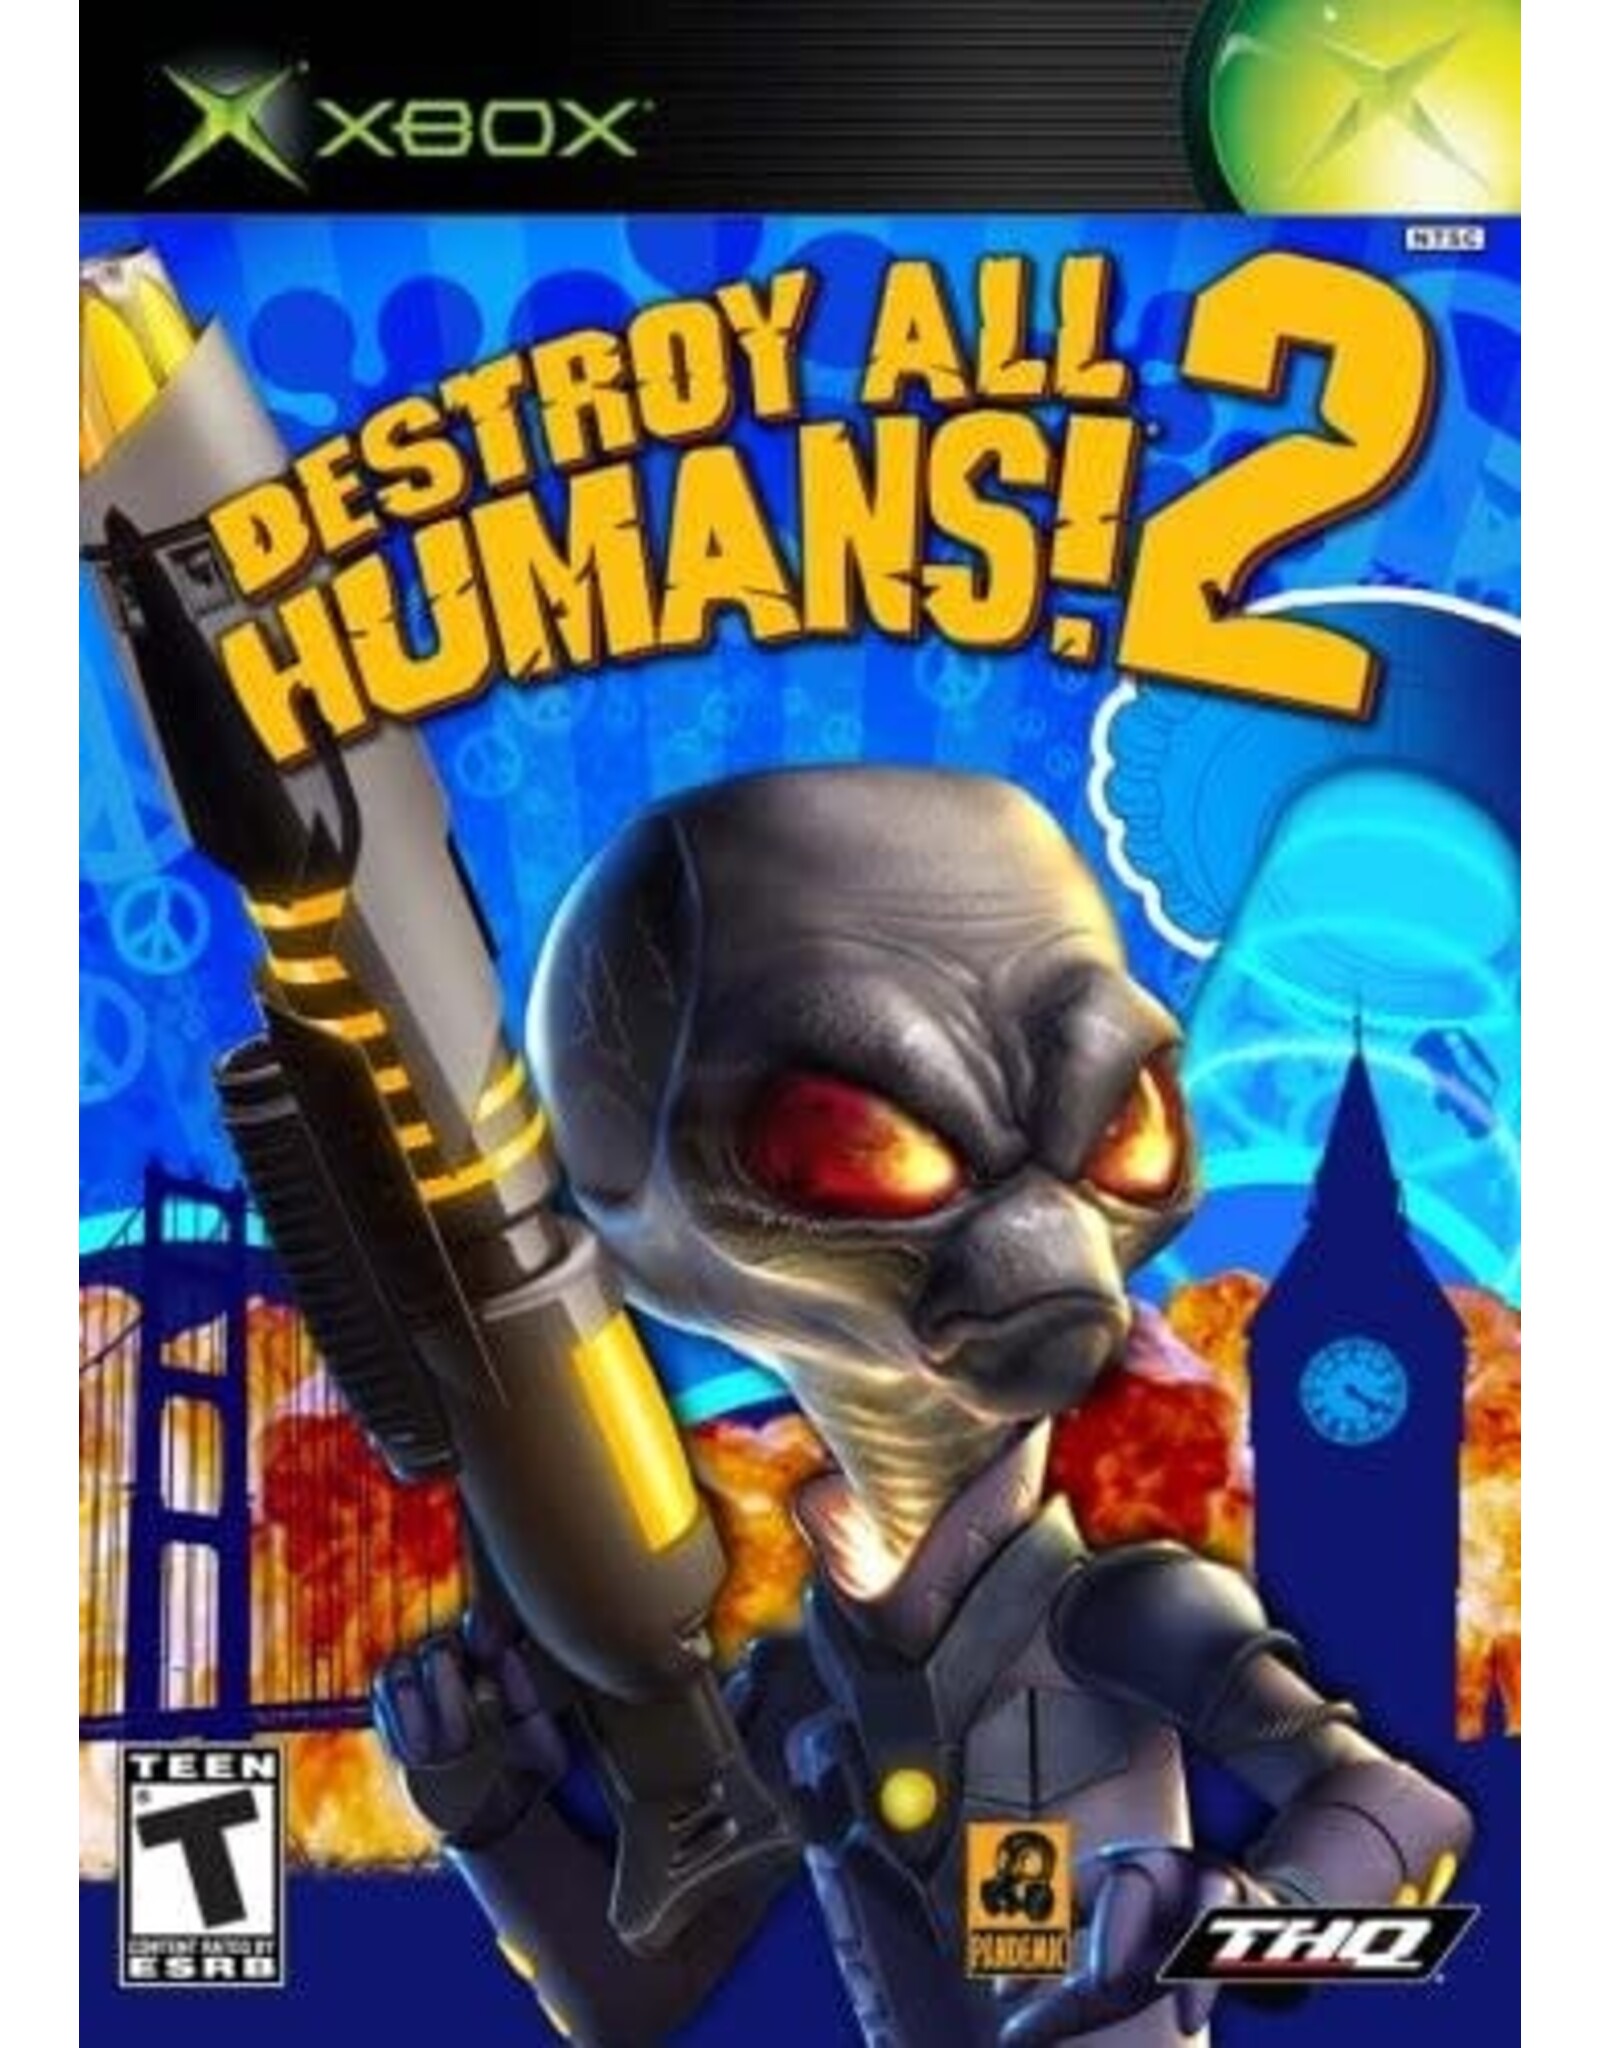 Xbox Destroy All Humans 2 (No Manual)